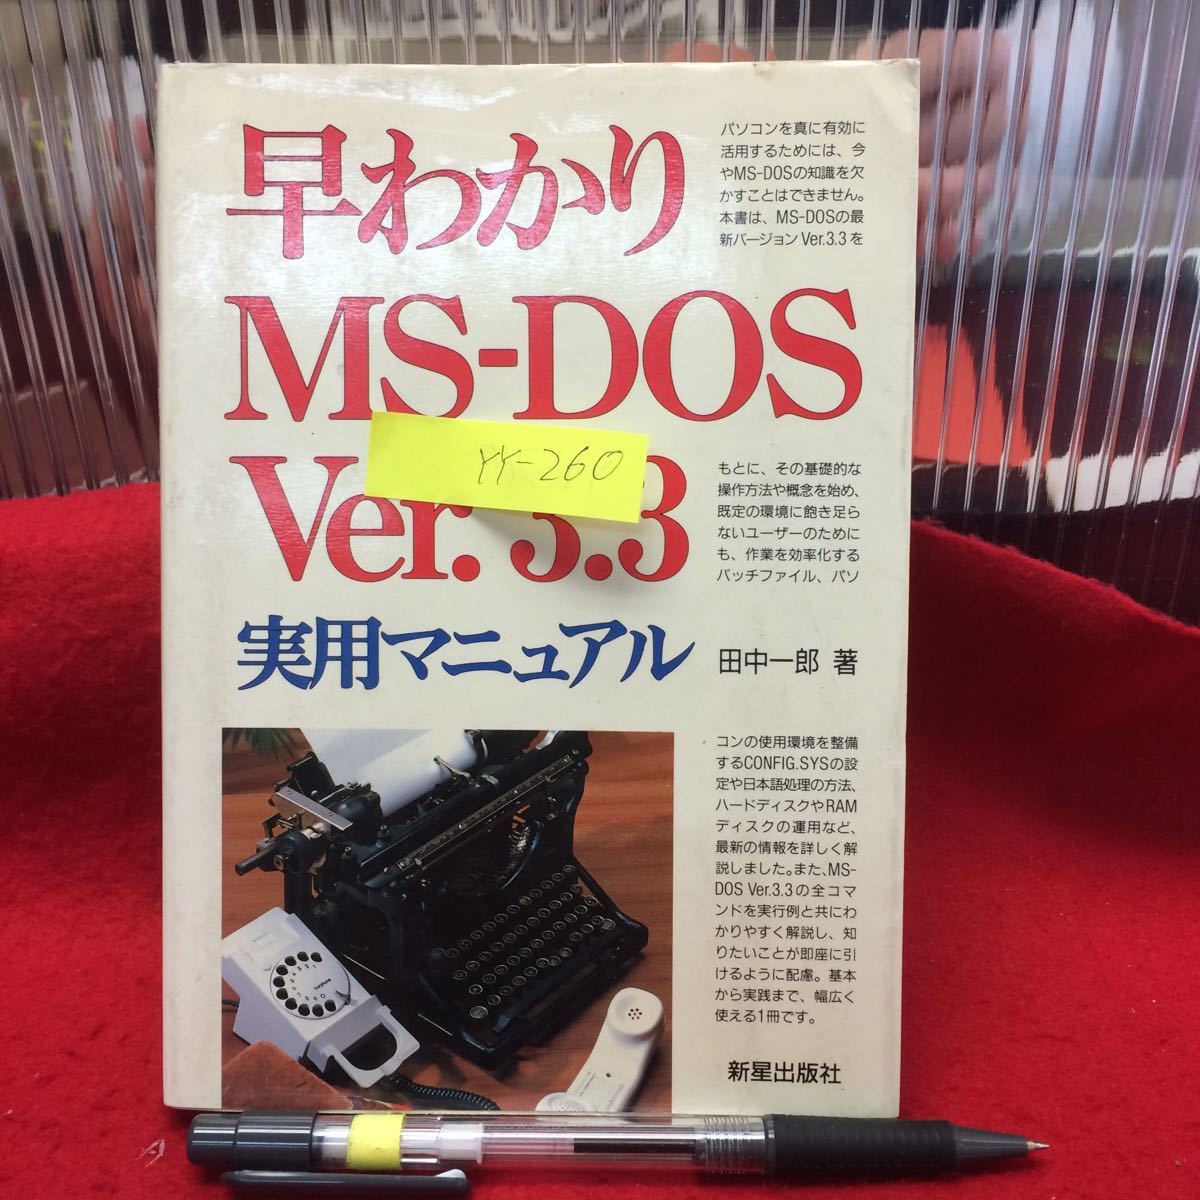 YY-260早わかりMS-DOS Ver.3.3実用マニュアル 1989年発行 著者/田中一郎 発行者/富永弘一 発行所/新星出版 基本となる知識と操作 _画像1